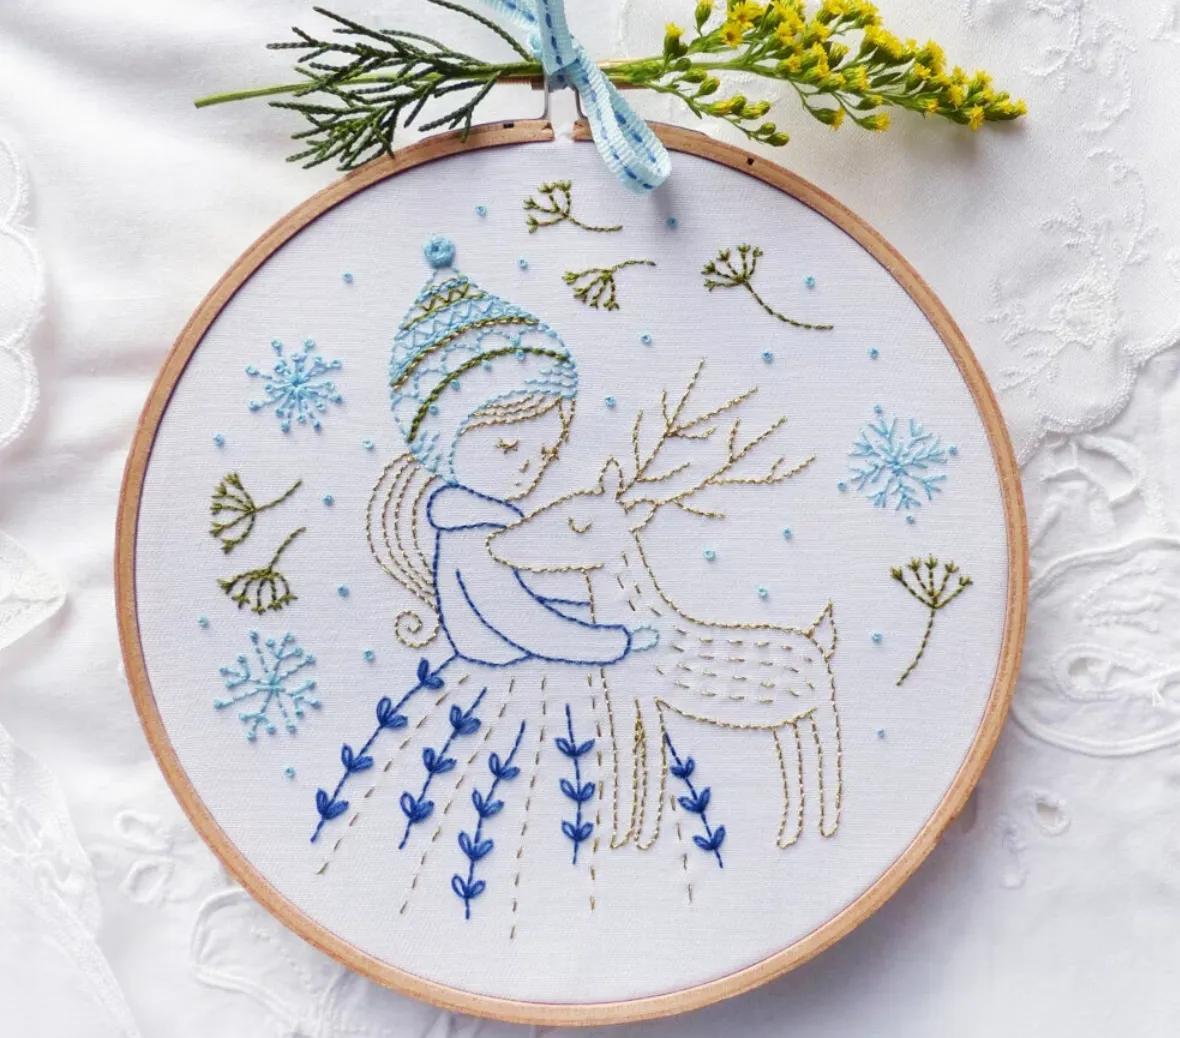 21 Christmas embroidery kits to make you feel festive - Gathered